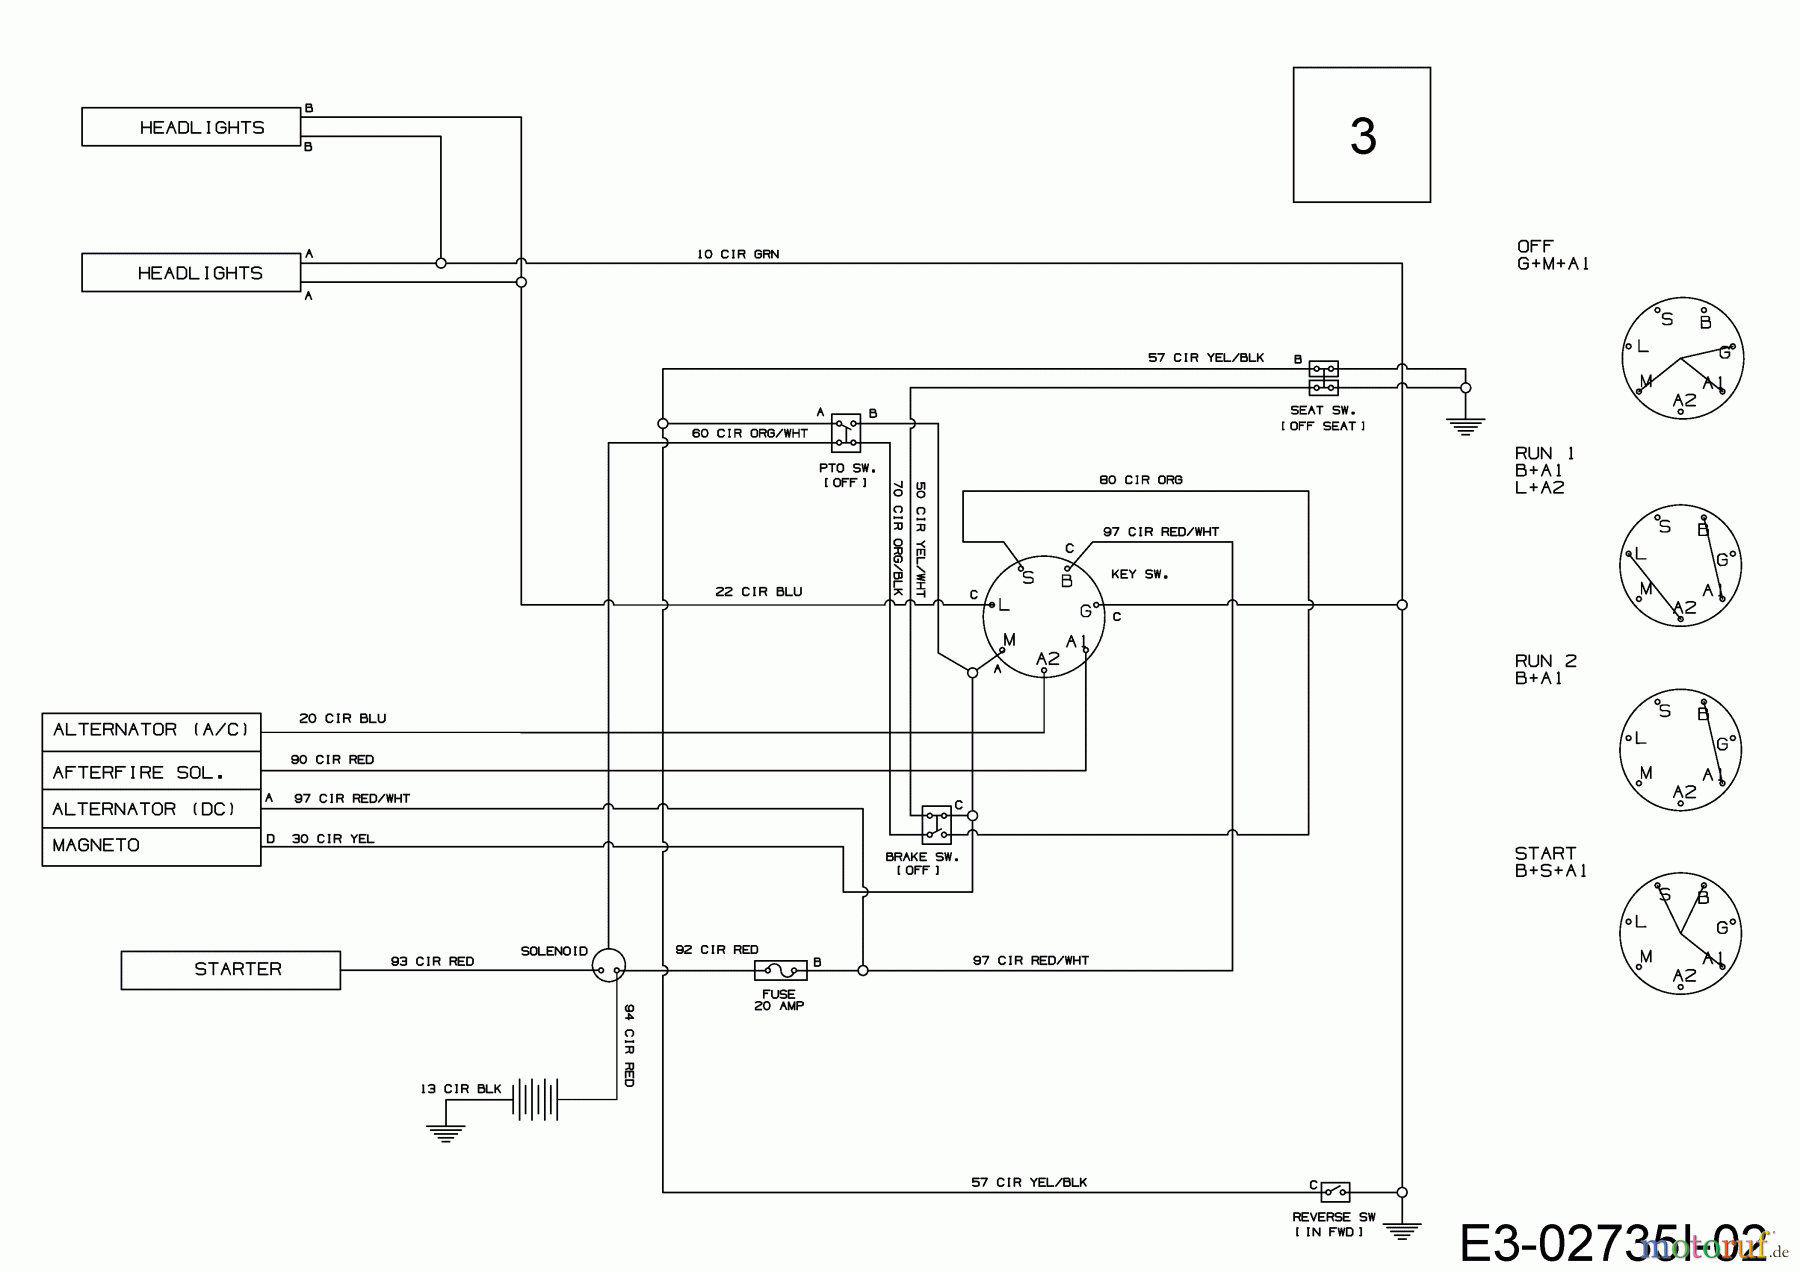  Bestgreen Lawn tractors BG 96 SBK 13A776SF655  (2019) Wiring diagram